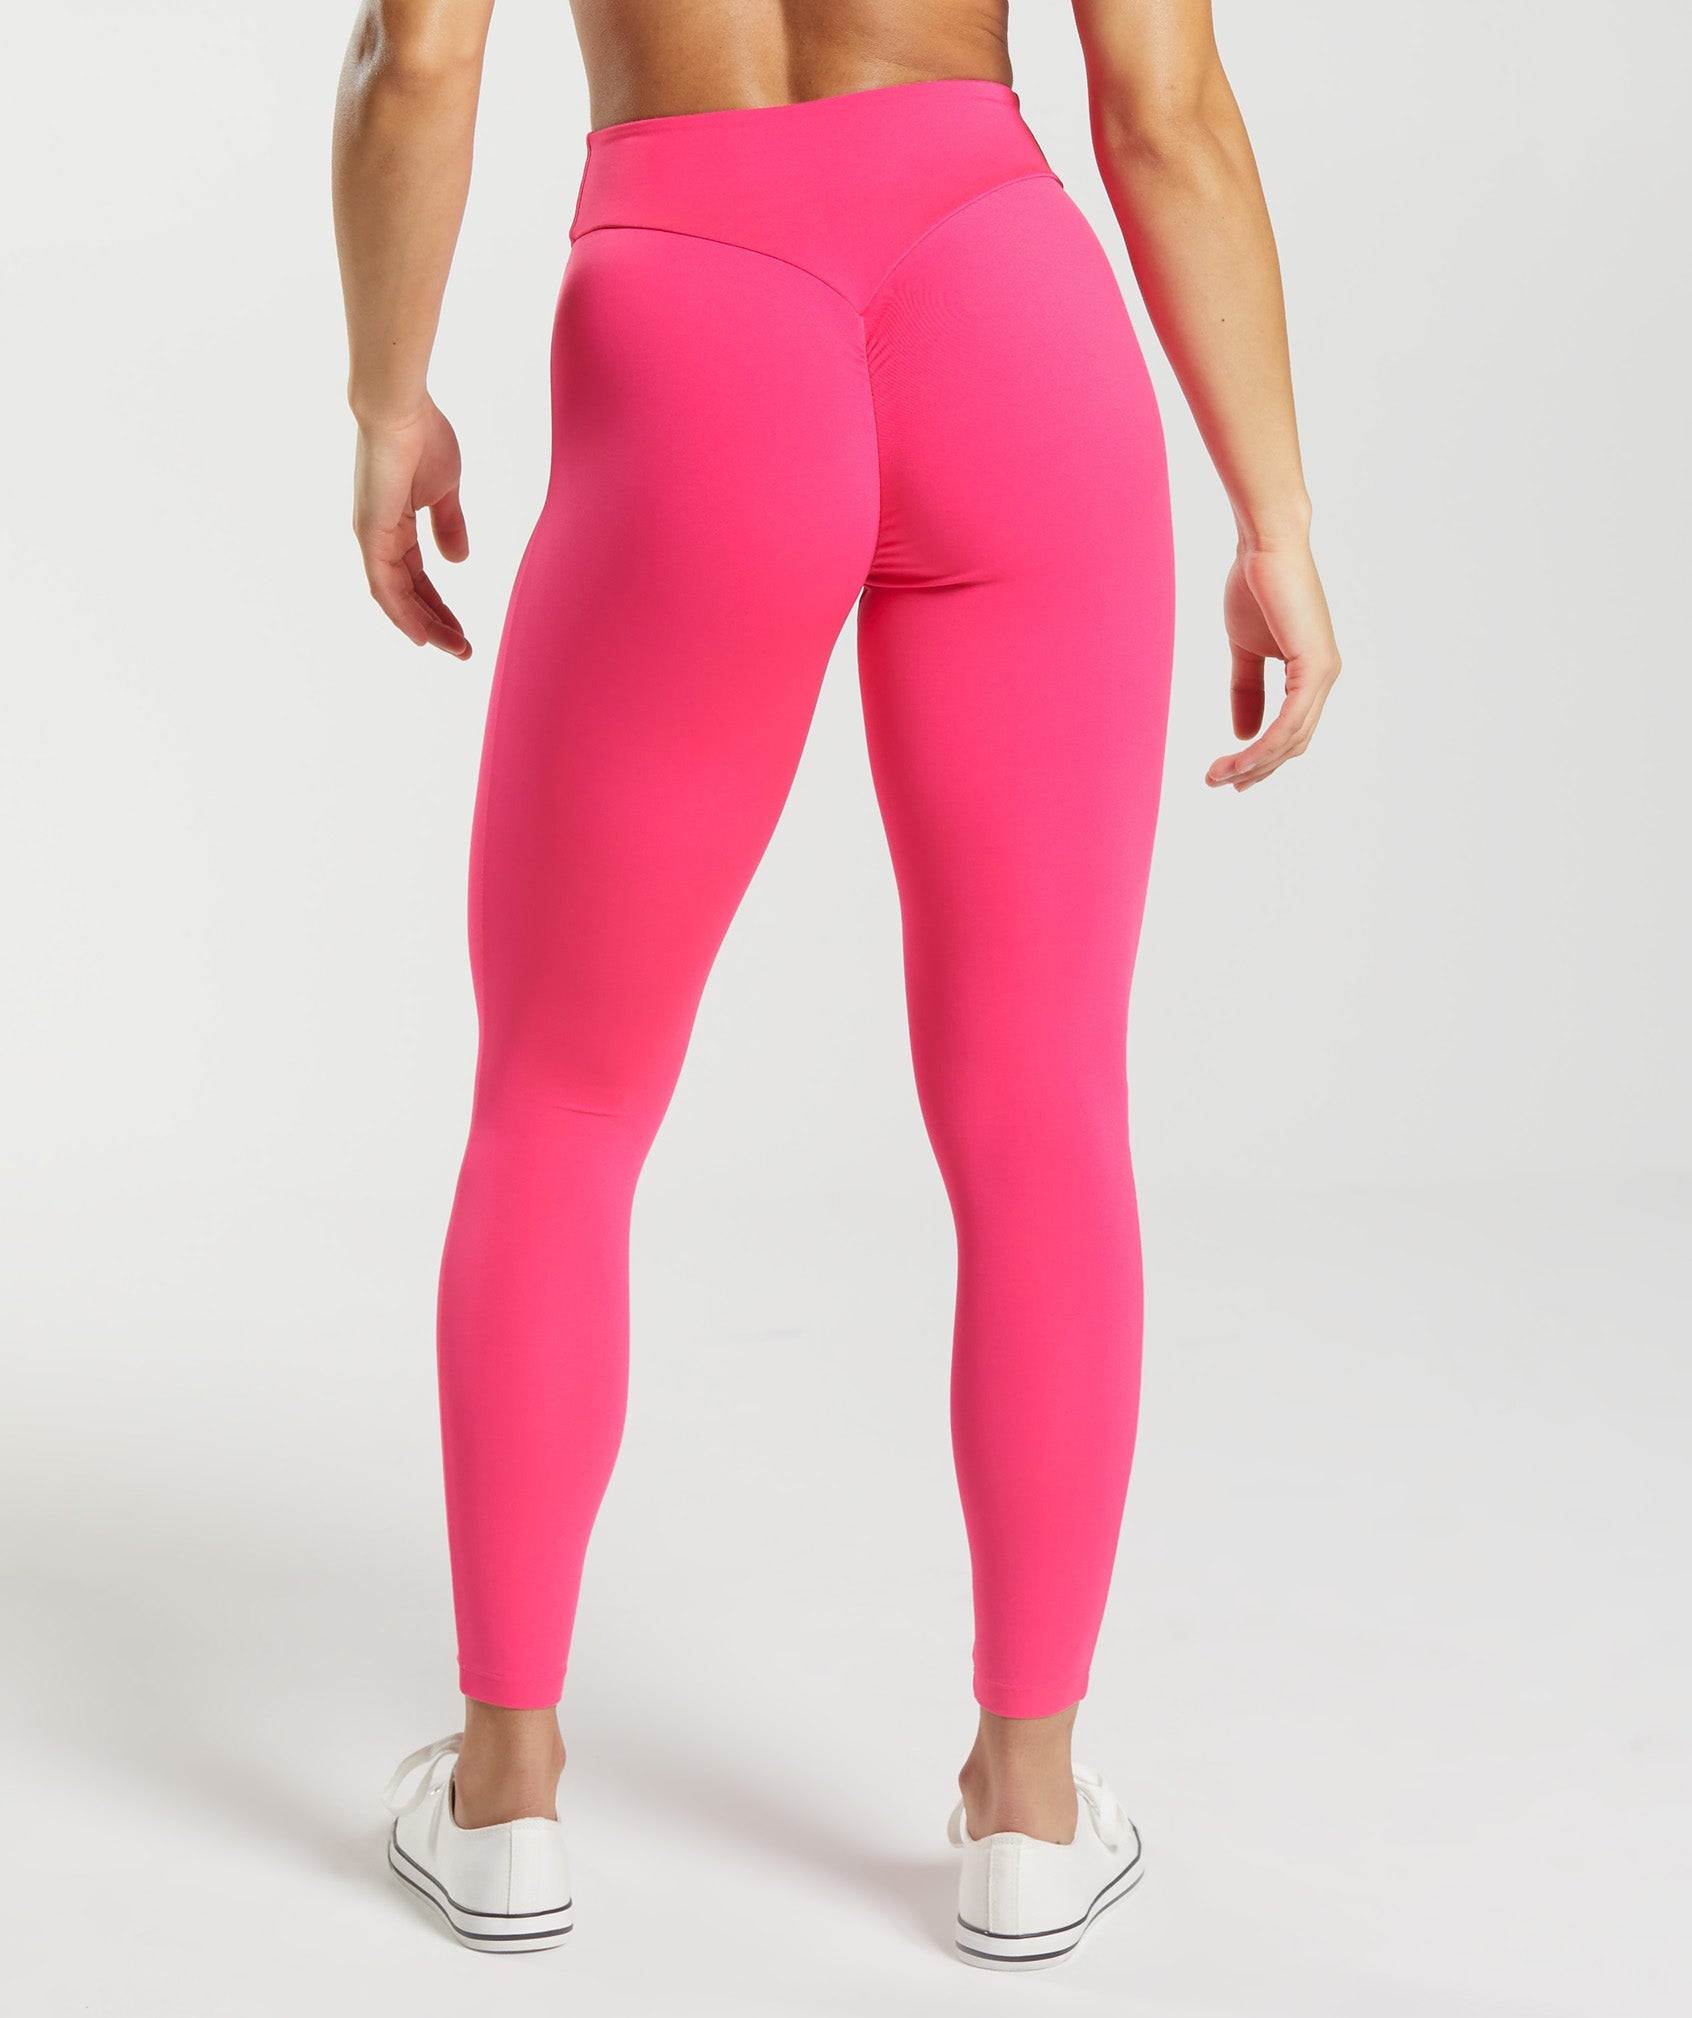 Carbon38 Flamingo Pink Gloss Leggings Set Workout